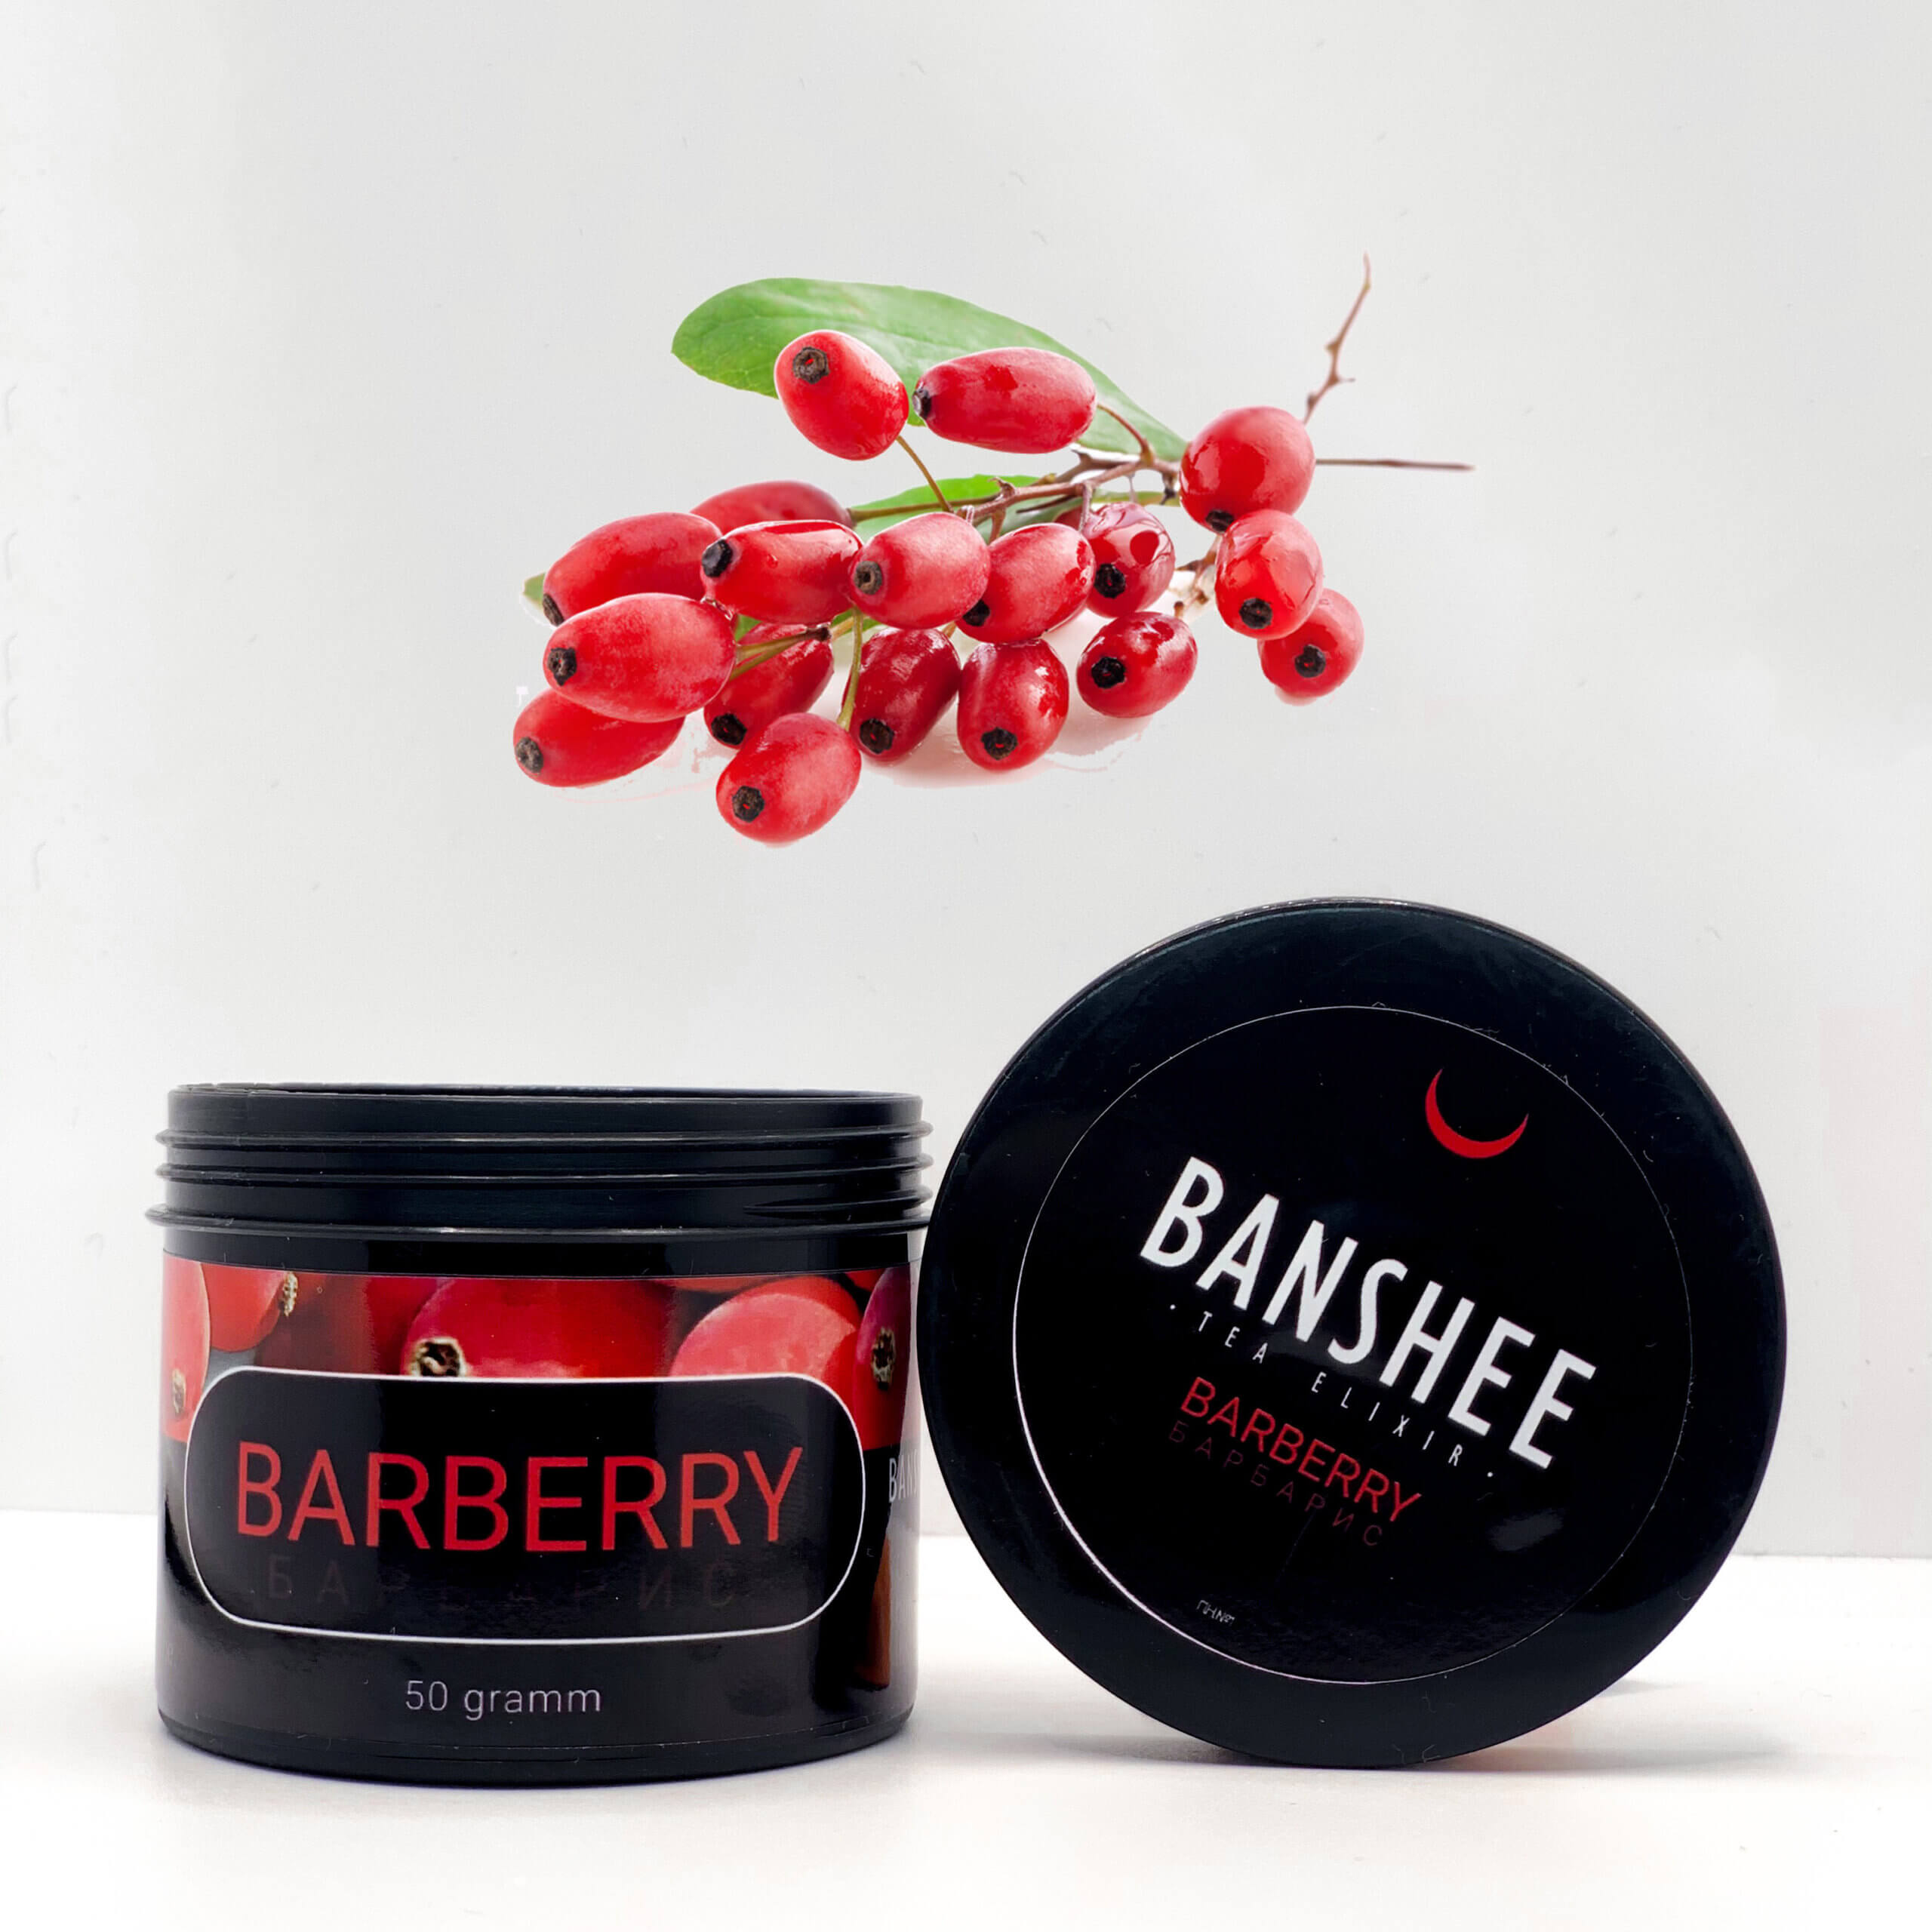 Banshee Dark Barberry - Барбарис